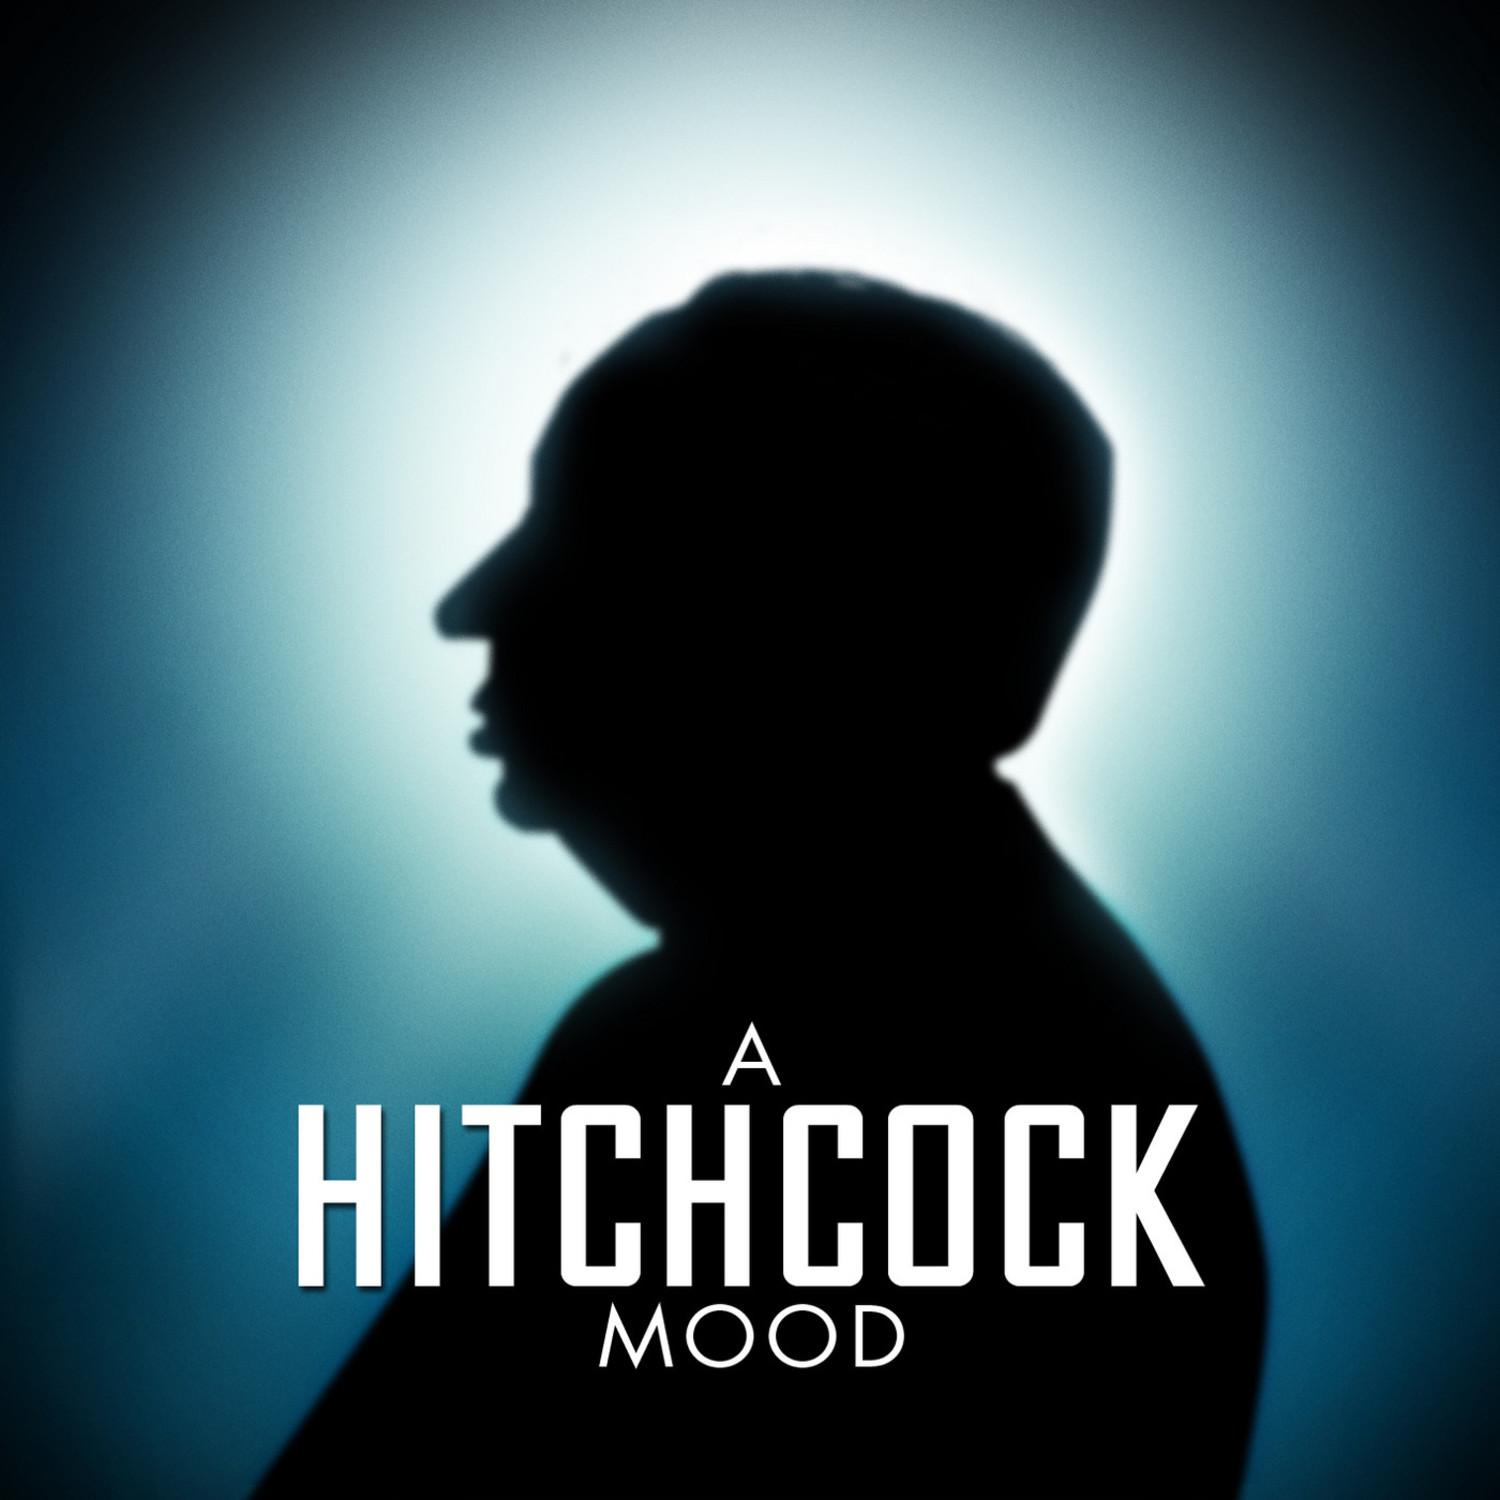 A Hitchcock Mood